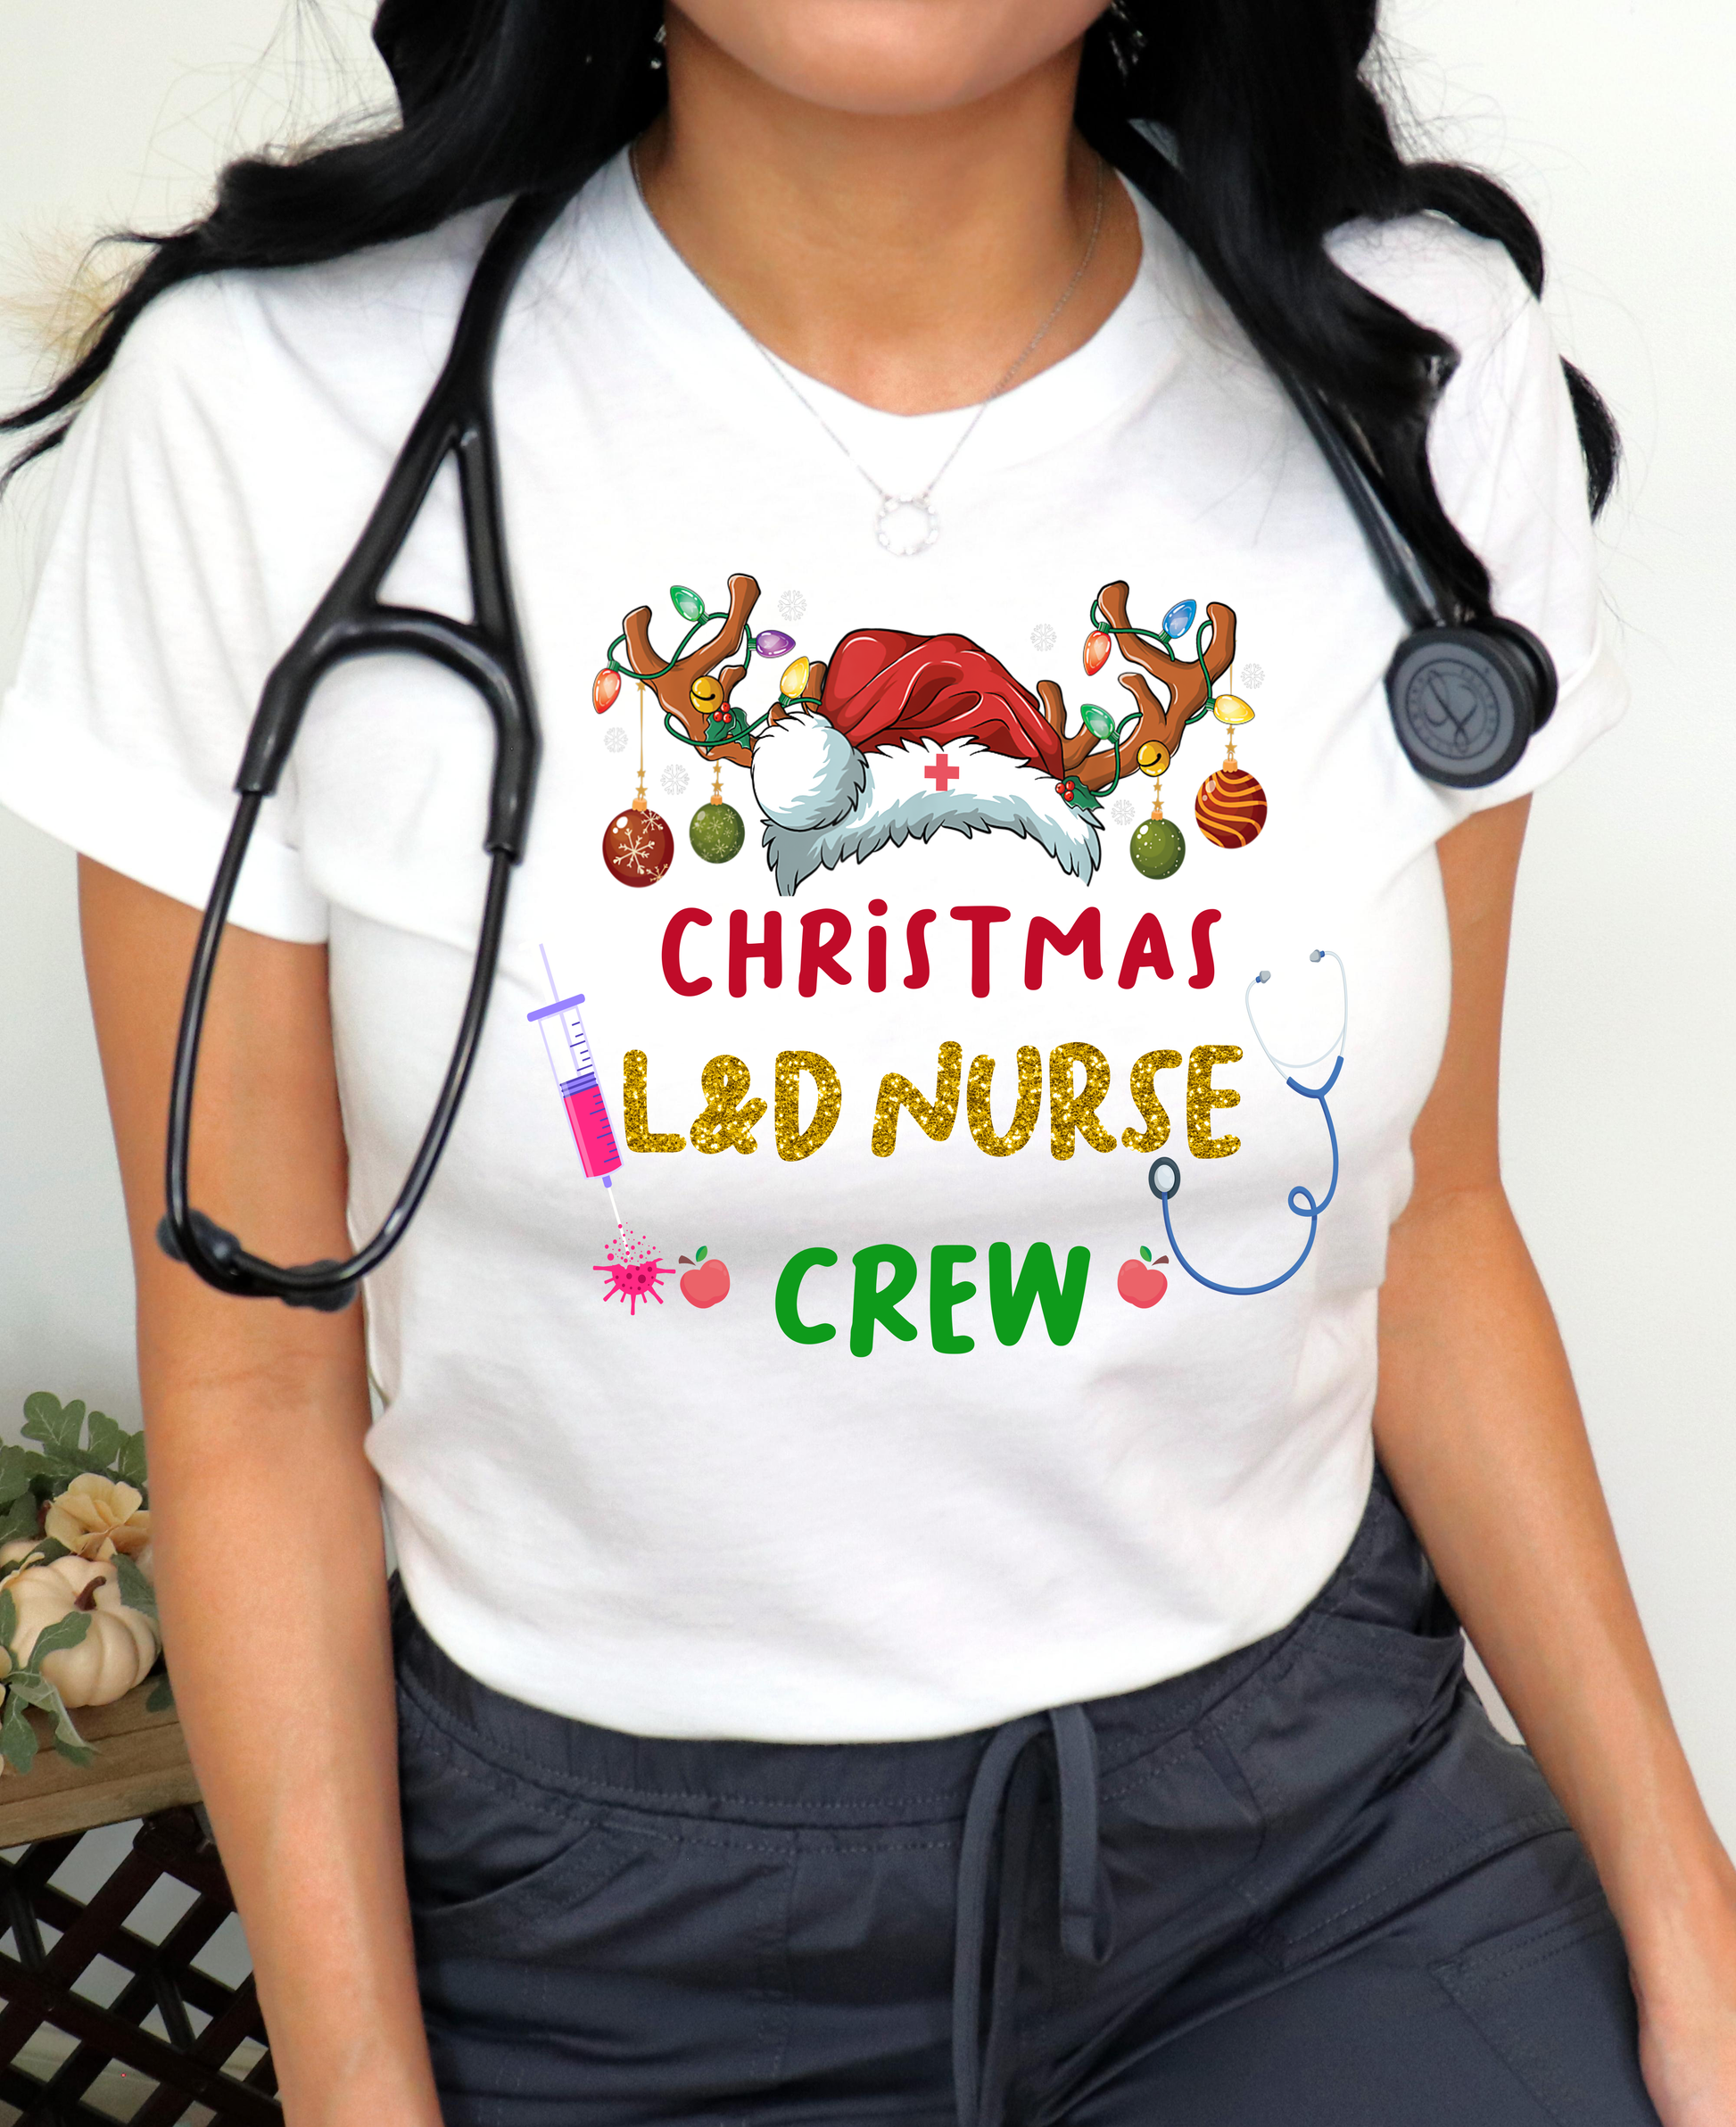 Medical Shirts-Nurses, MA, CNA, Midwife, Nurse practioners, MD